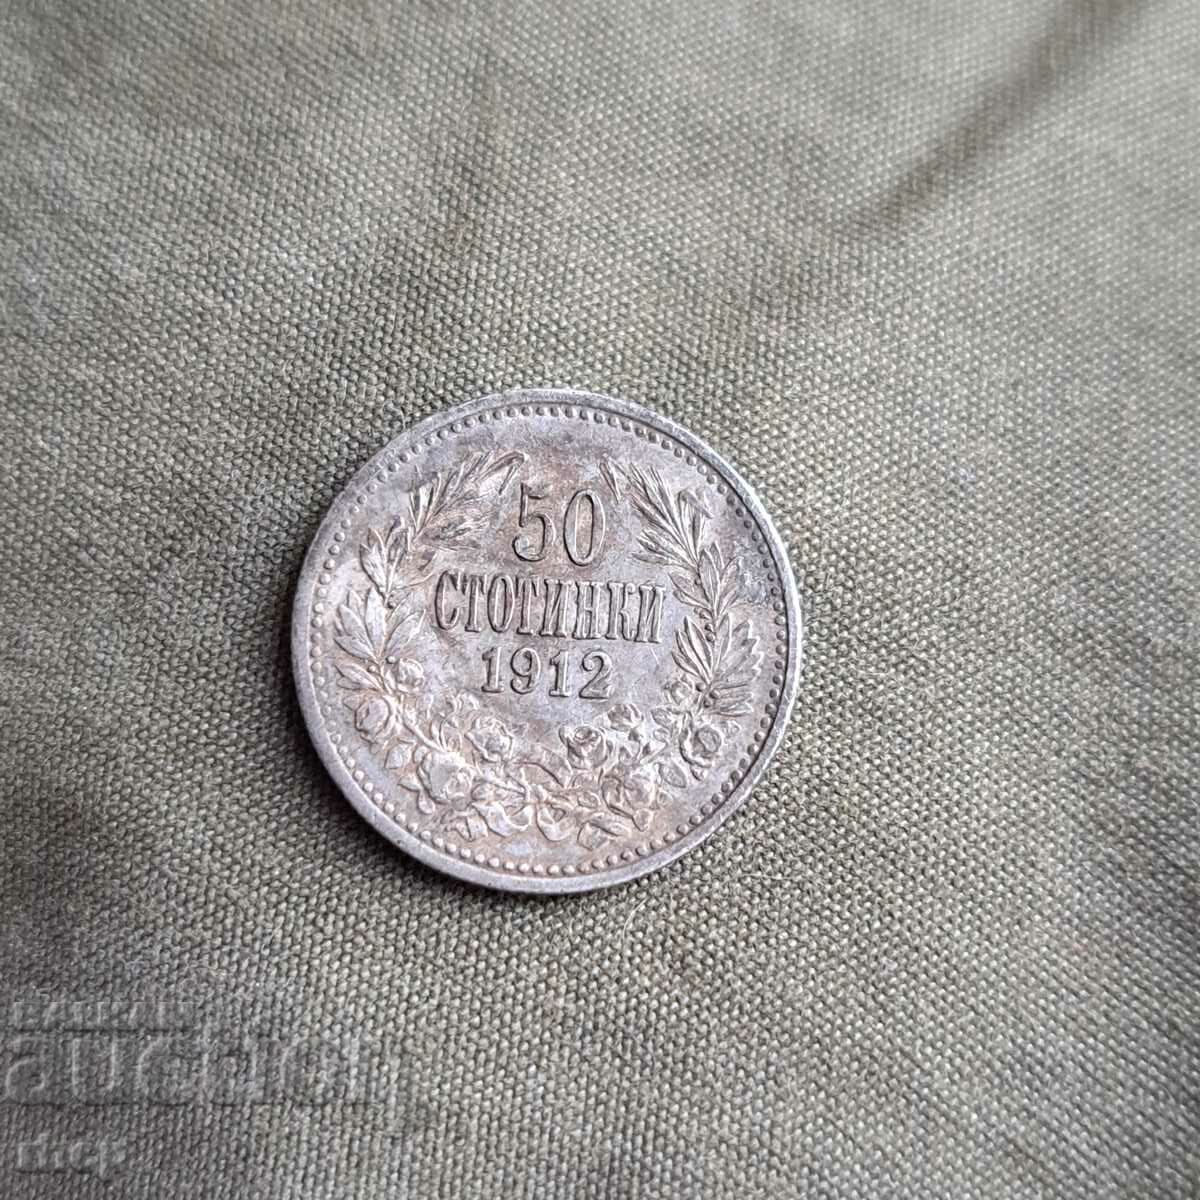 50 стотинки 1912 - България